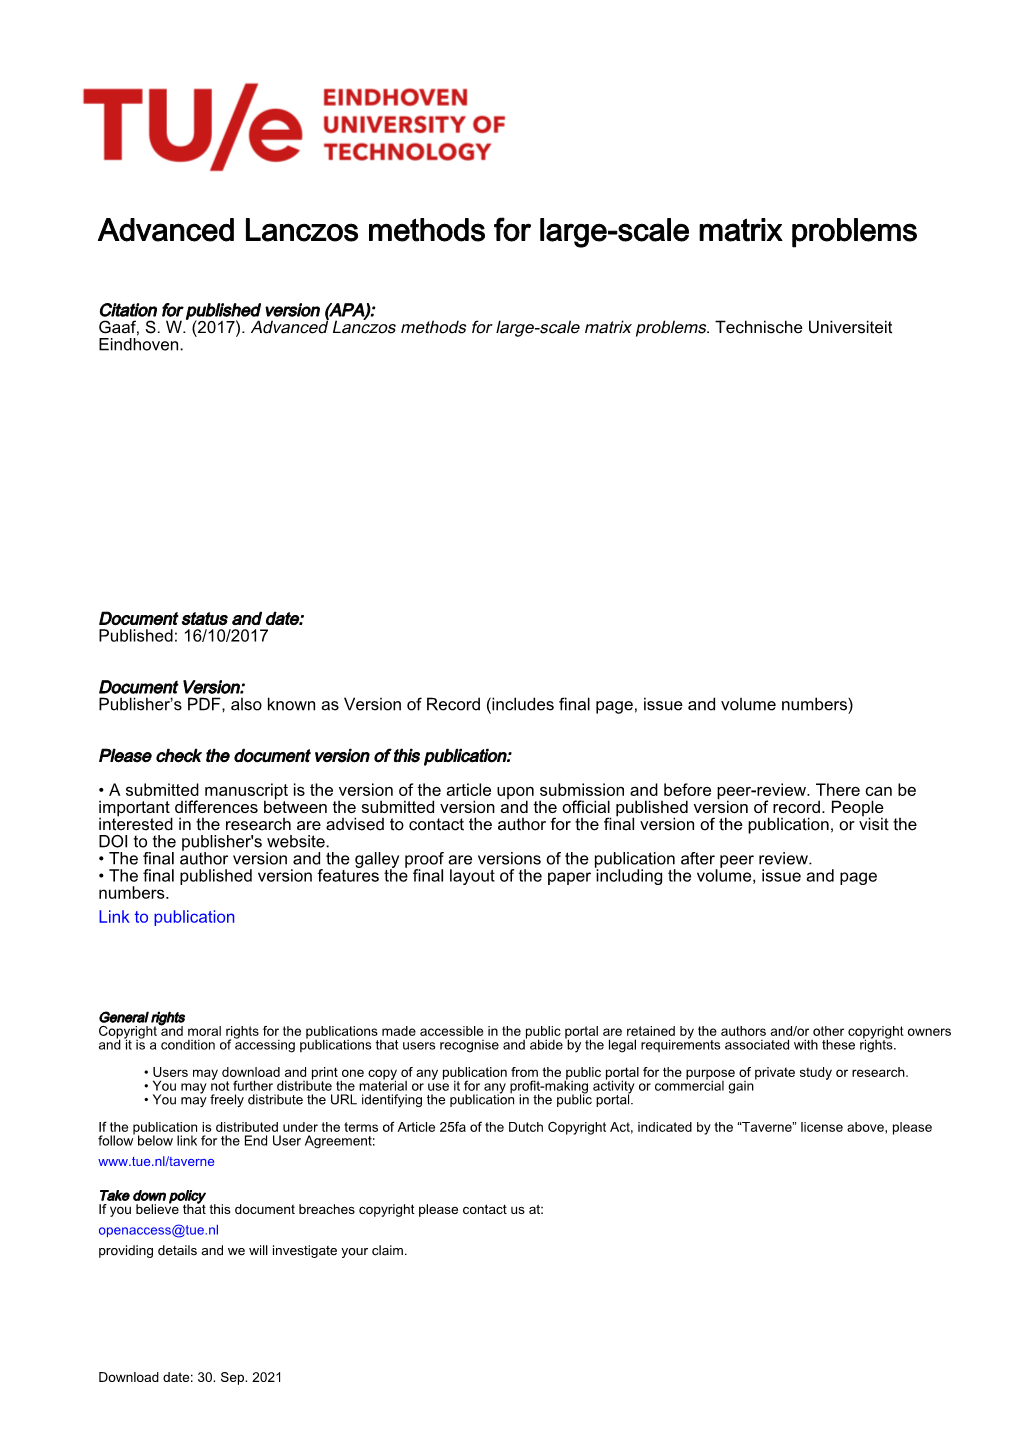 Advanced Lanczos Methods for Large-Scale Matrix Problems